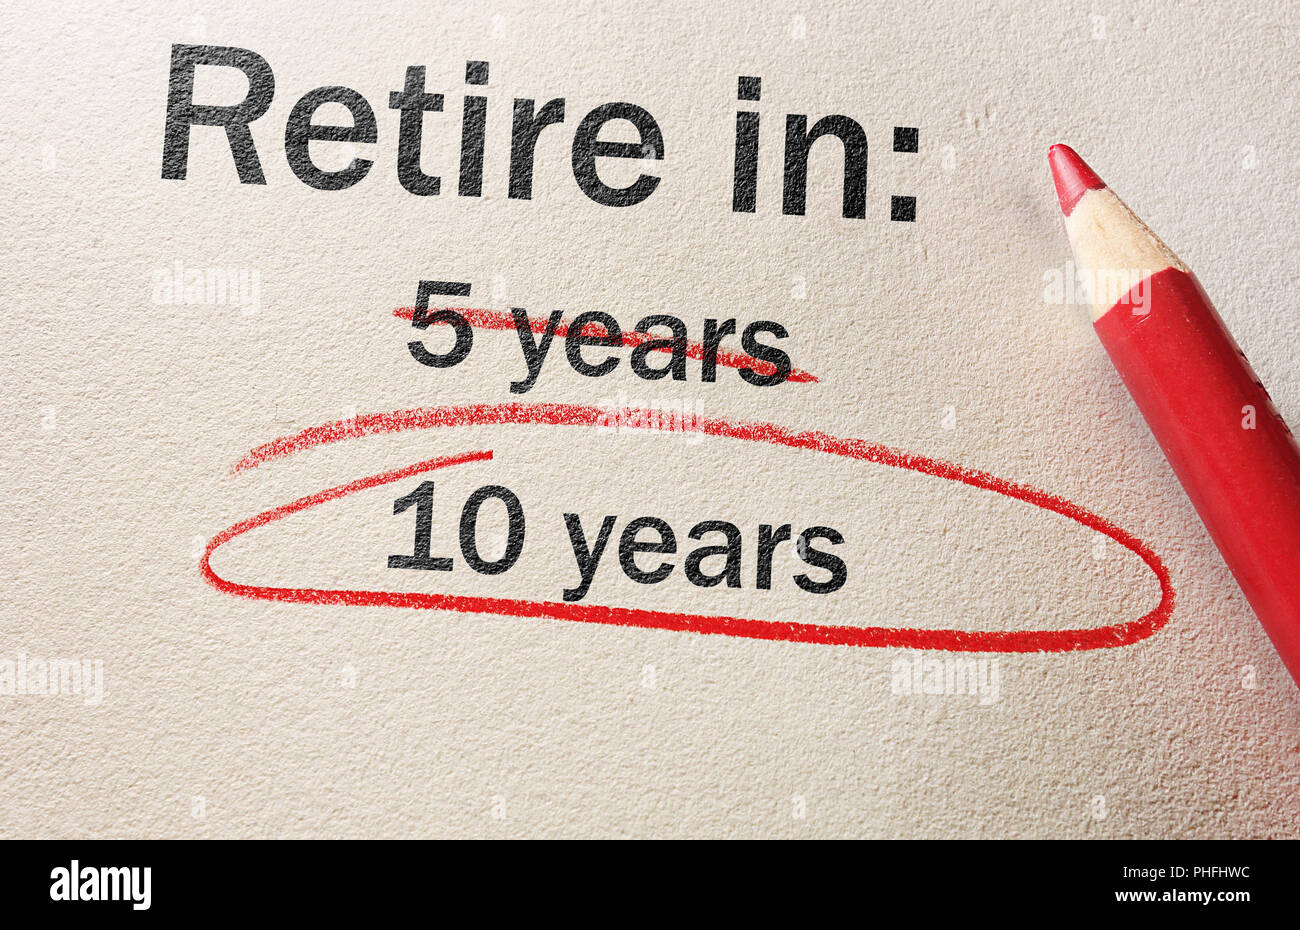 Delayed retirement concept Stock Photo